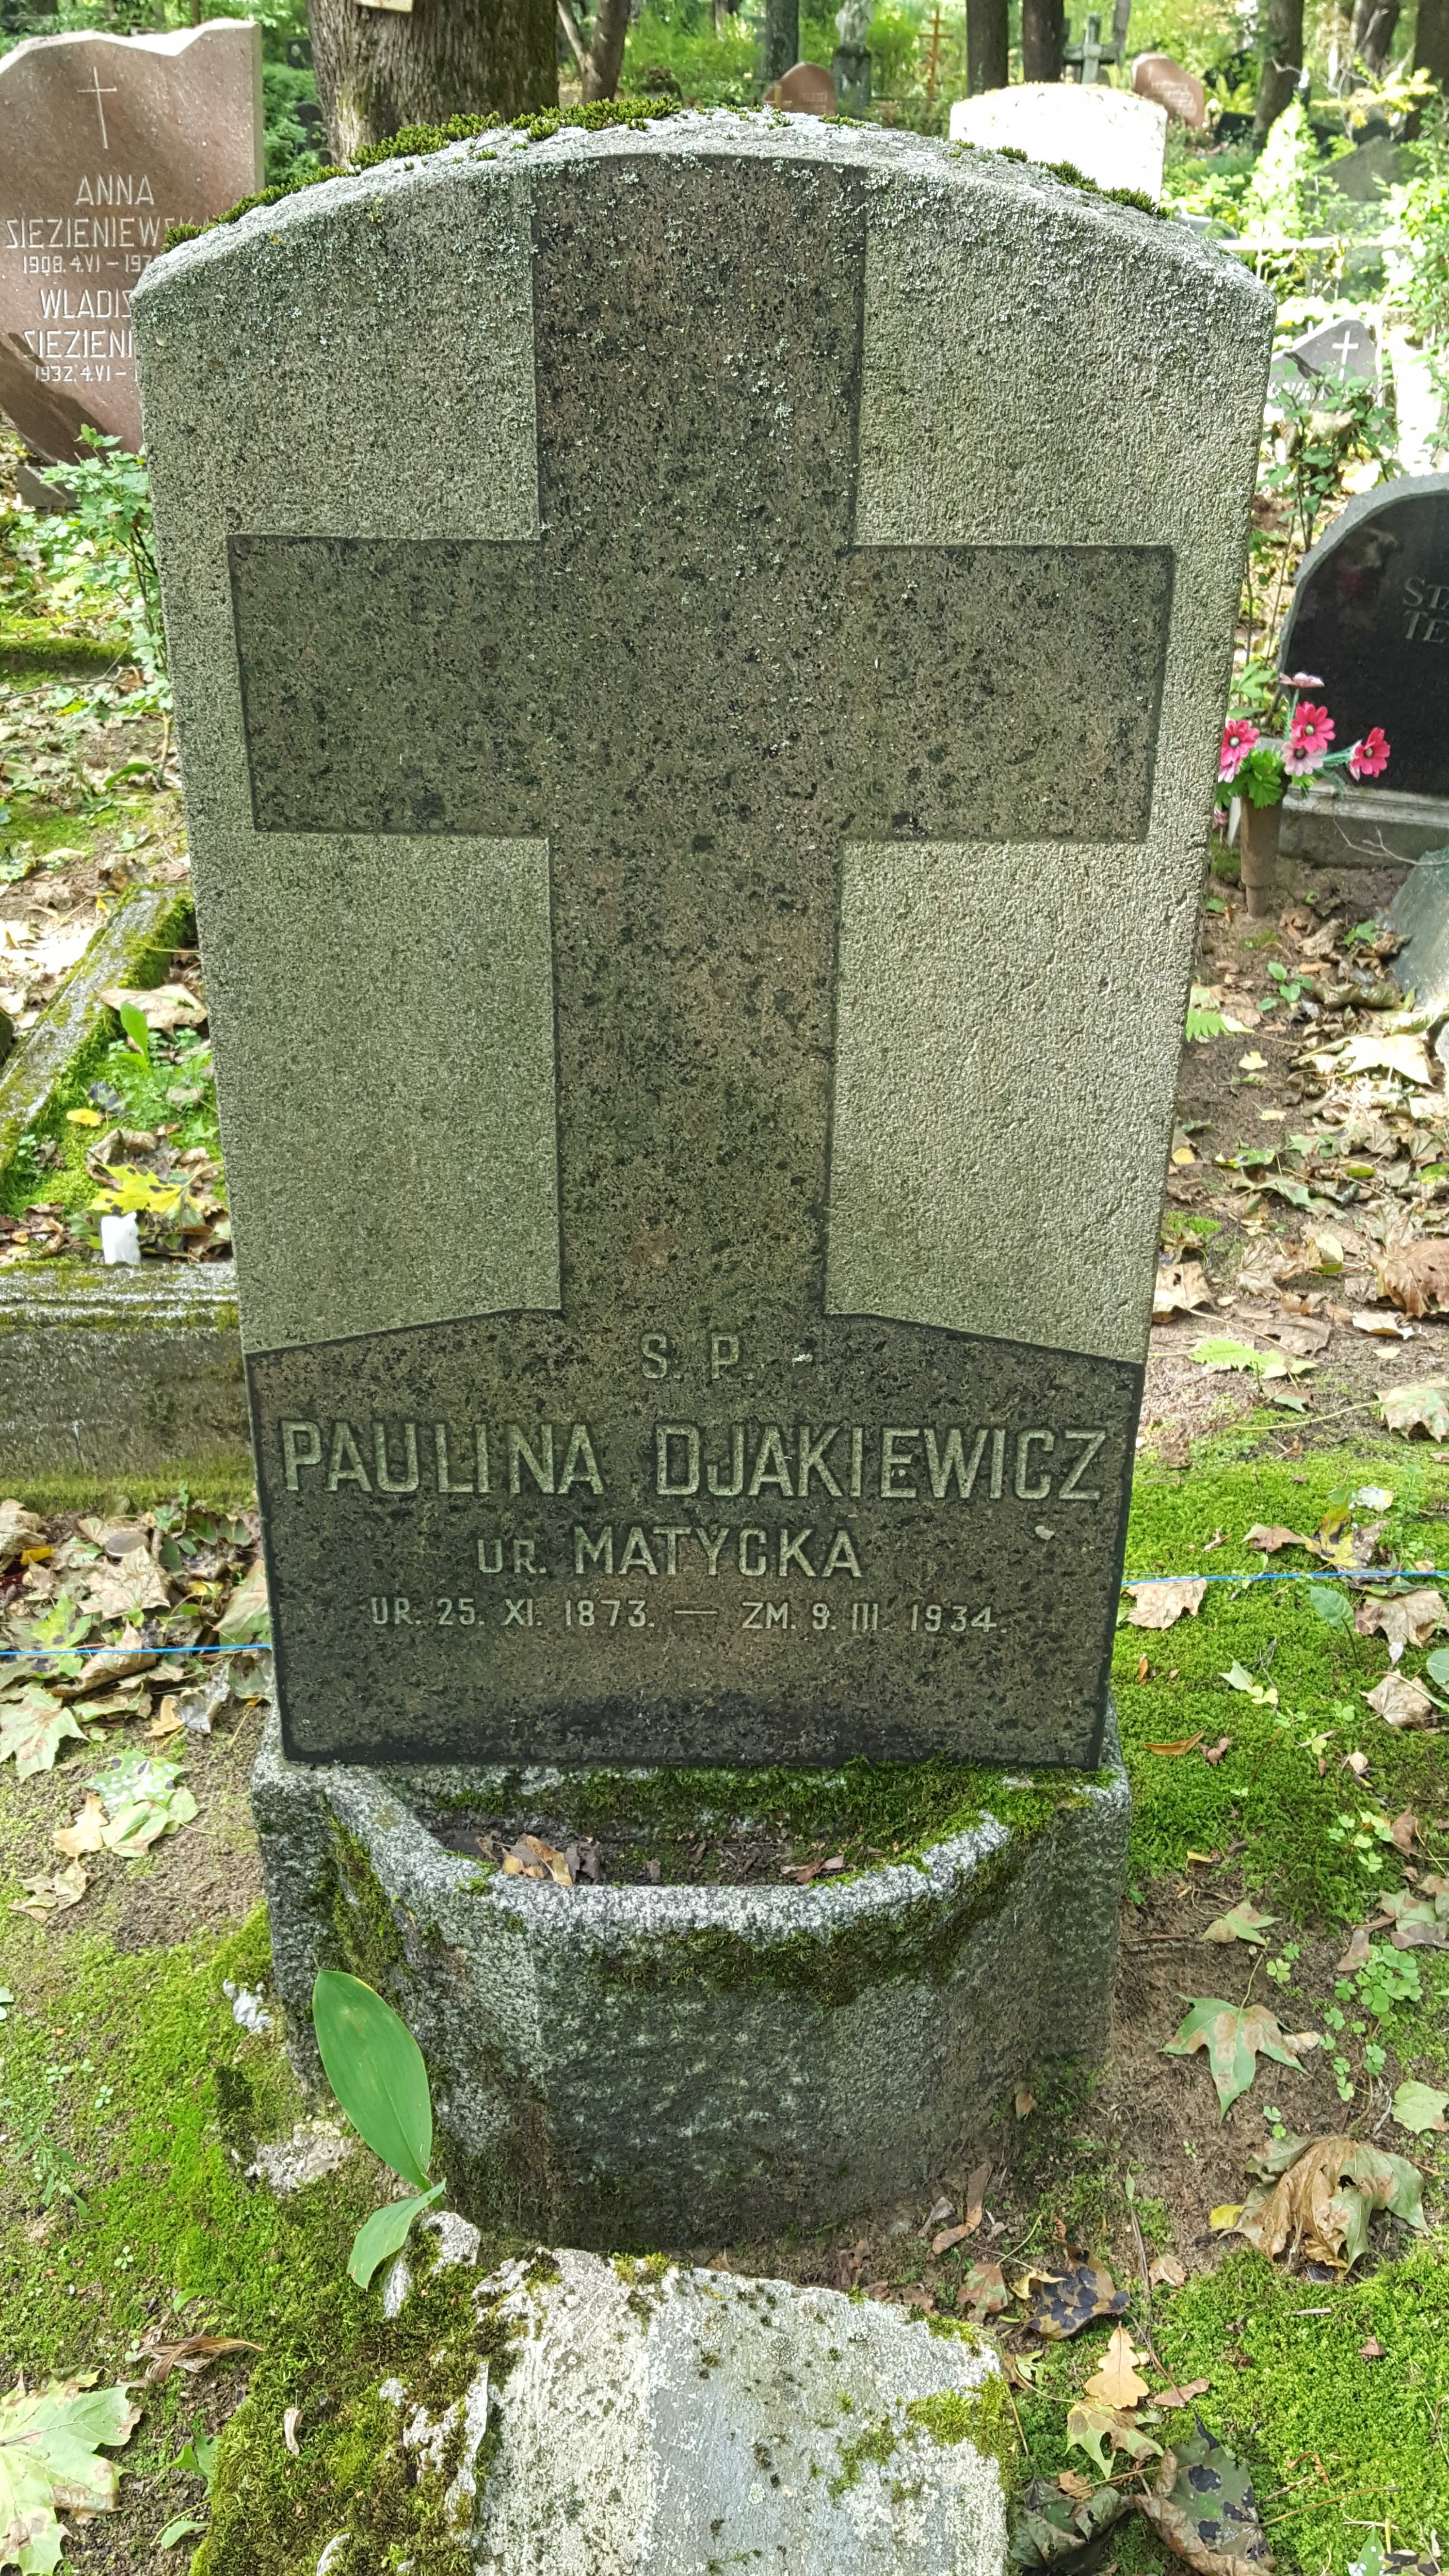 Tombstone of Paulina Djakiewicz, St Michael's cemetery in Riga, as of 2021.